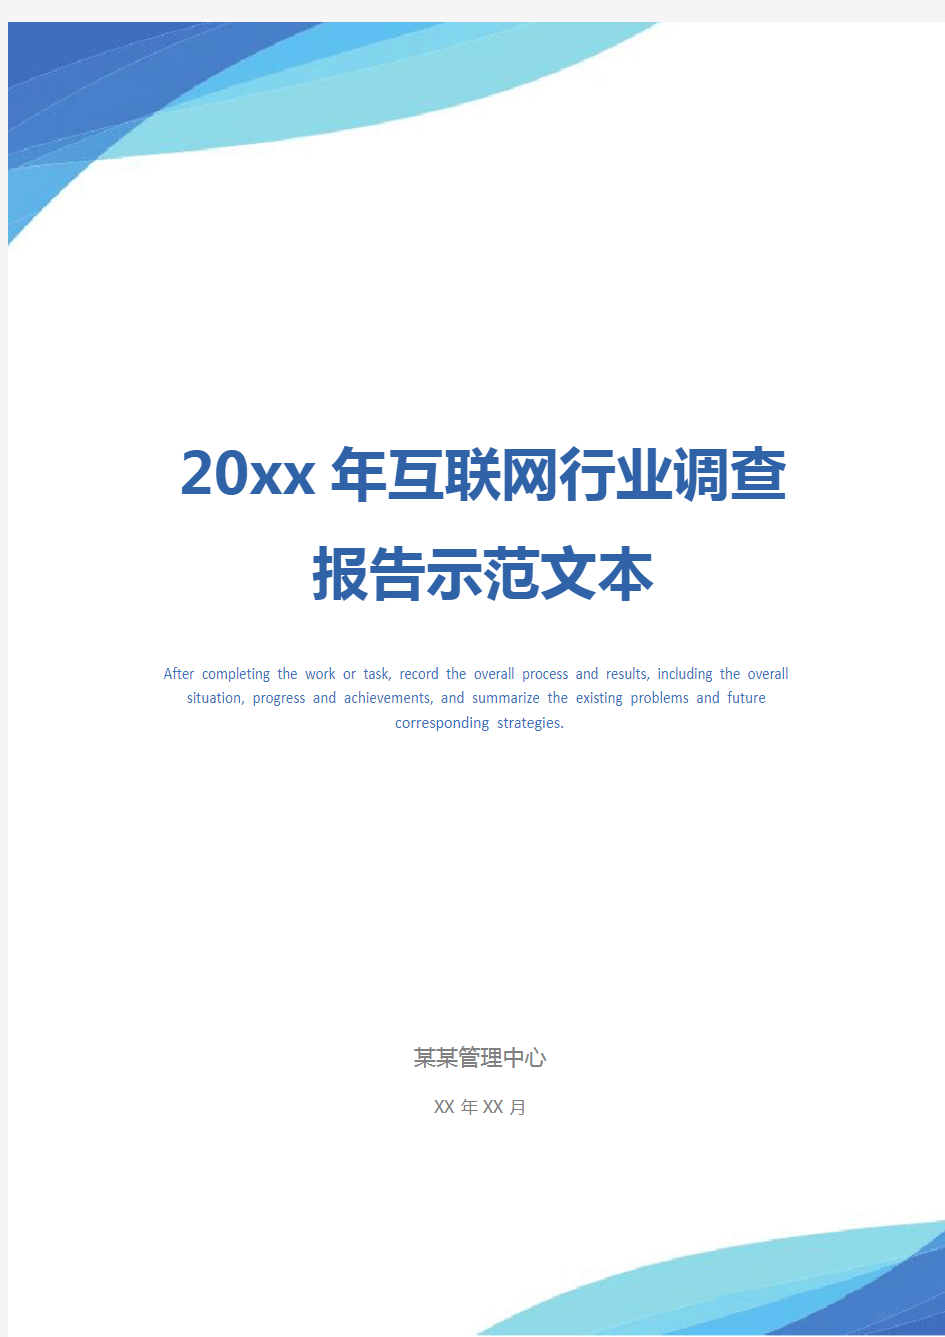 20xx年互联网行业调查报告示范文本